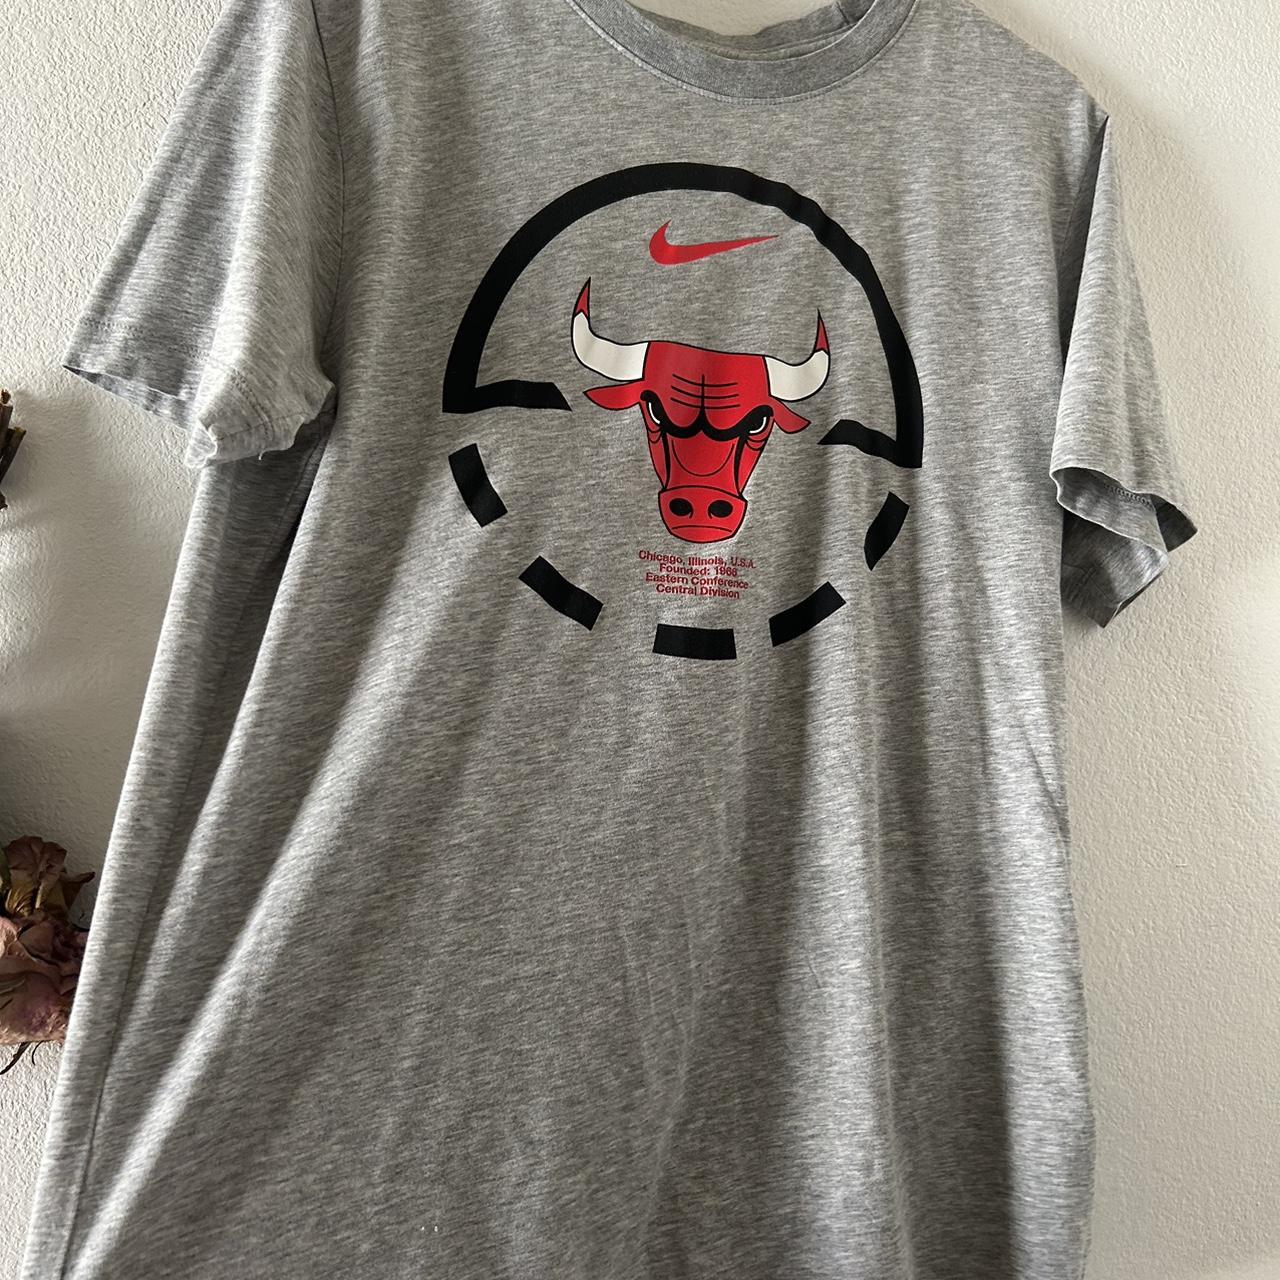 Chicago Bulls T-Shirt size M worn a few times i - Depop